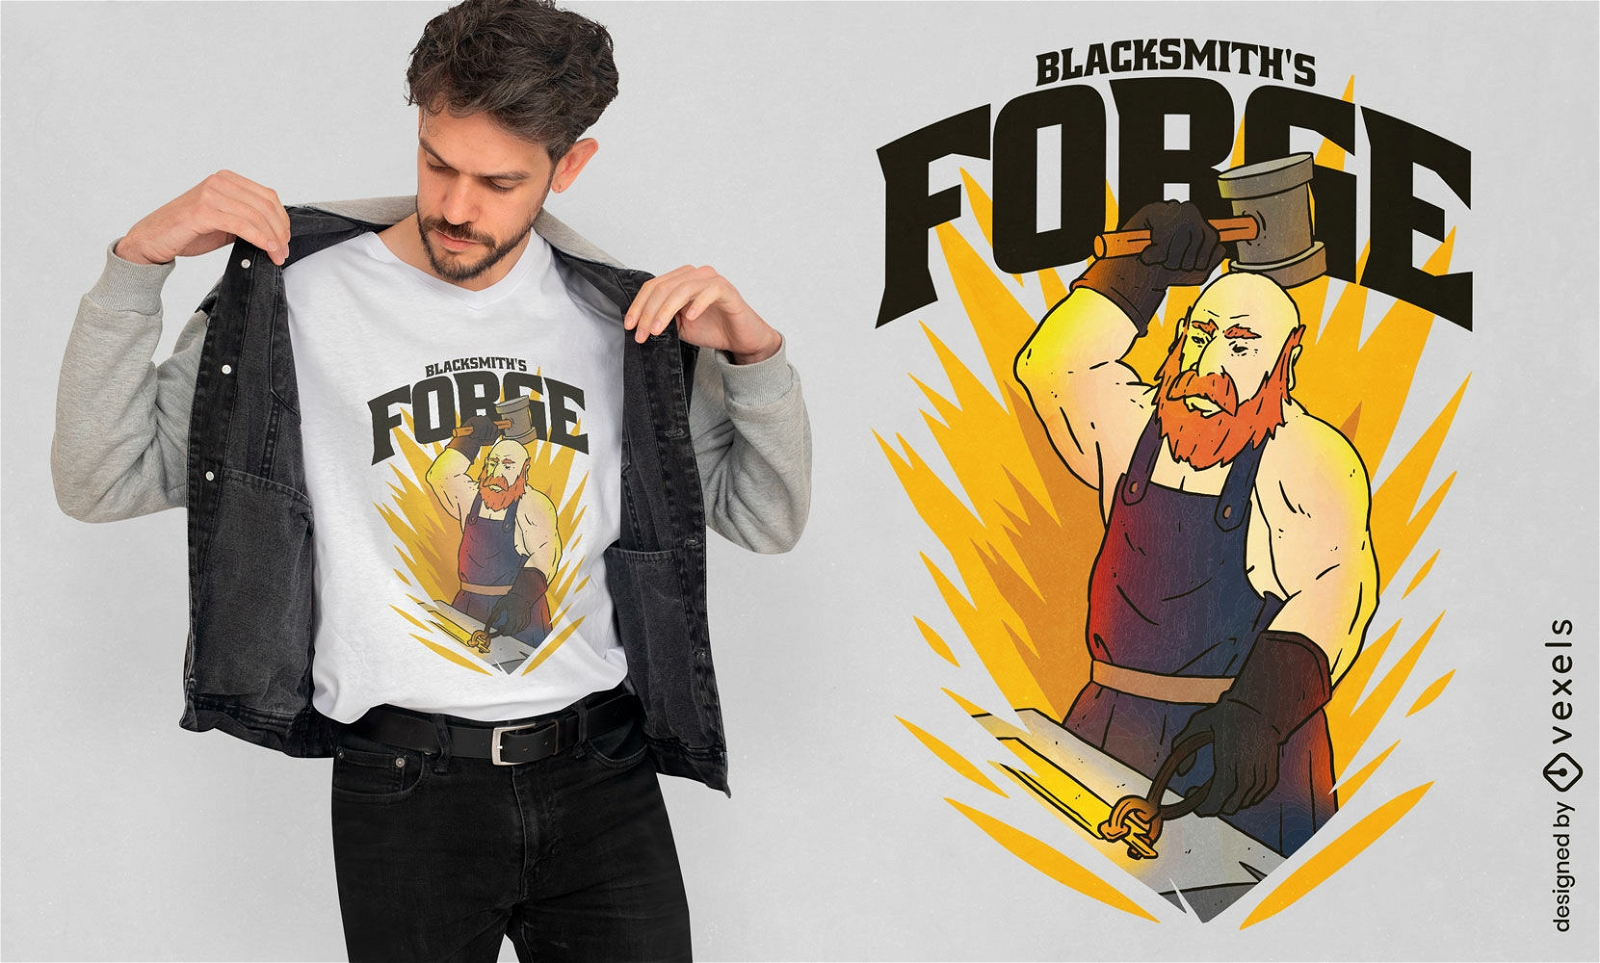 Blacksmith man quote t-shirt design